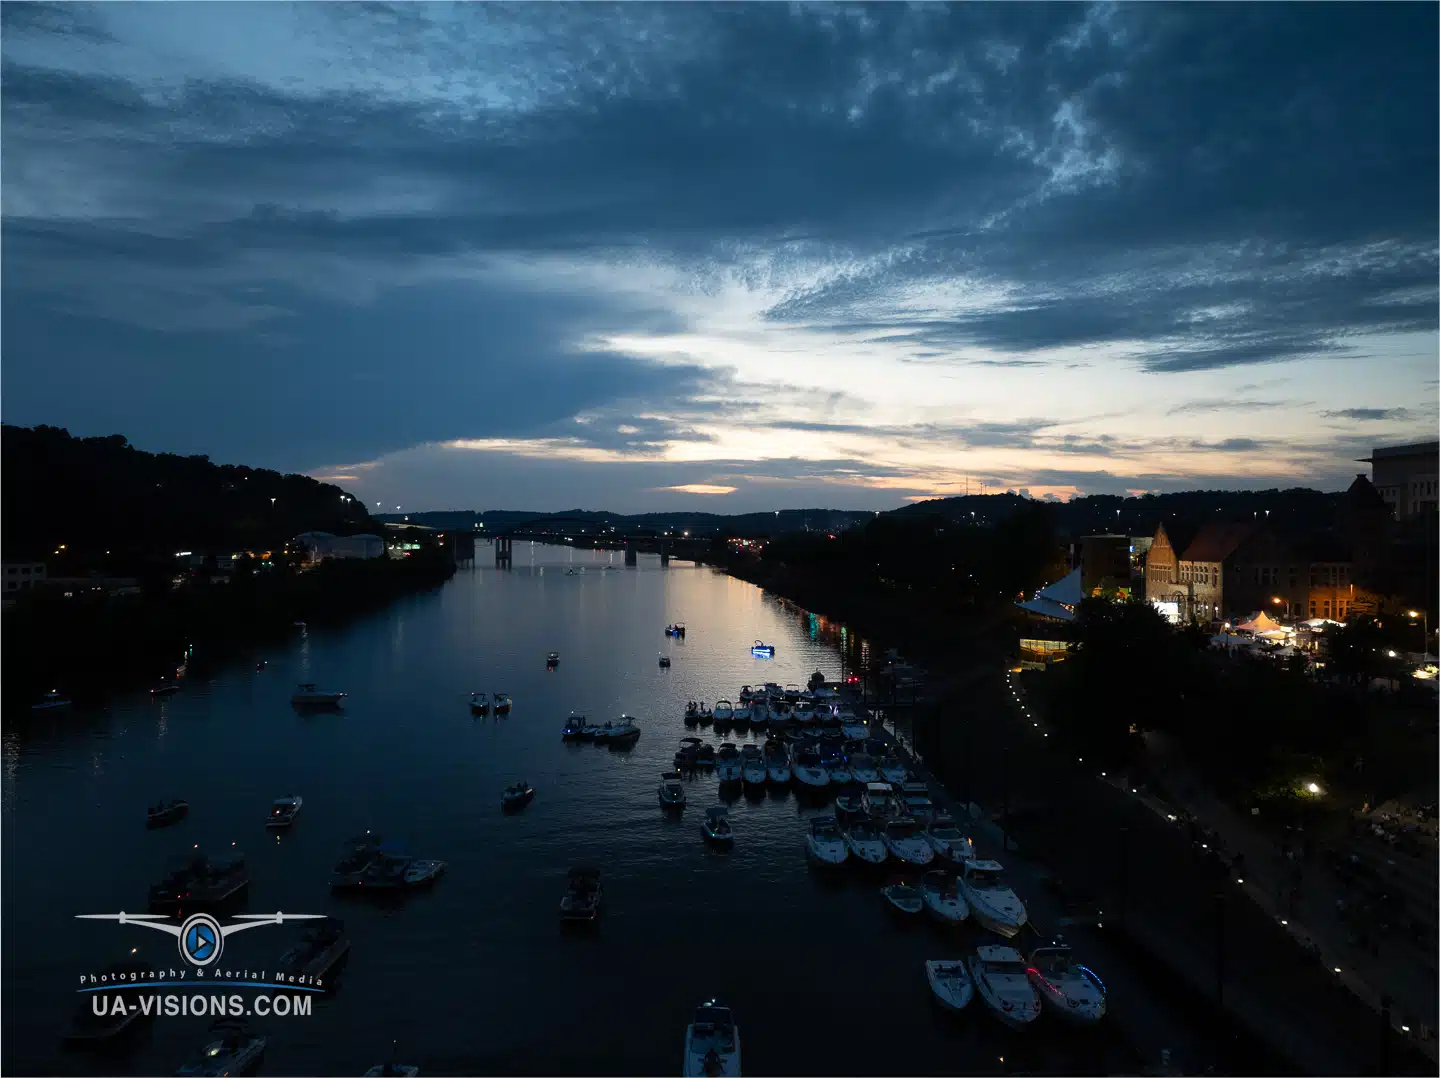 Evening of Lights on the River. Aerial photo of the Charleston Sternwheel Regatta